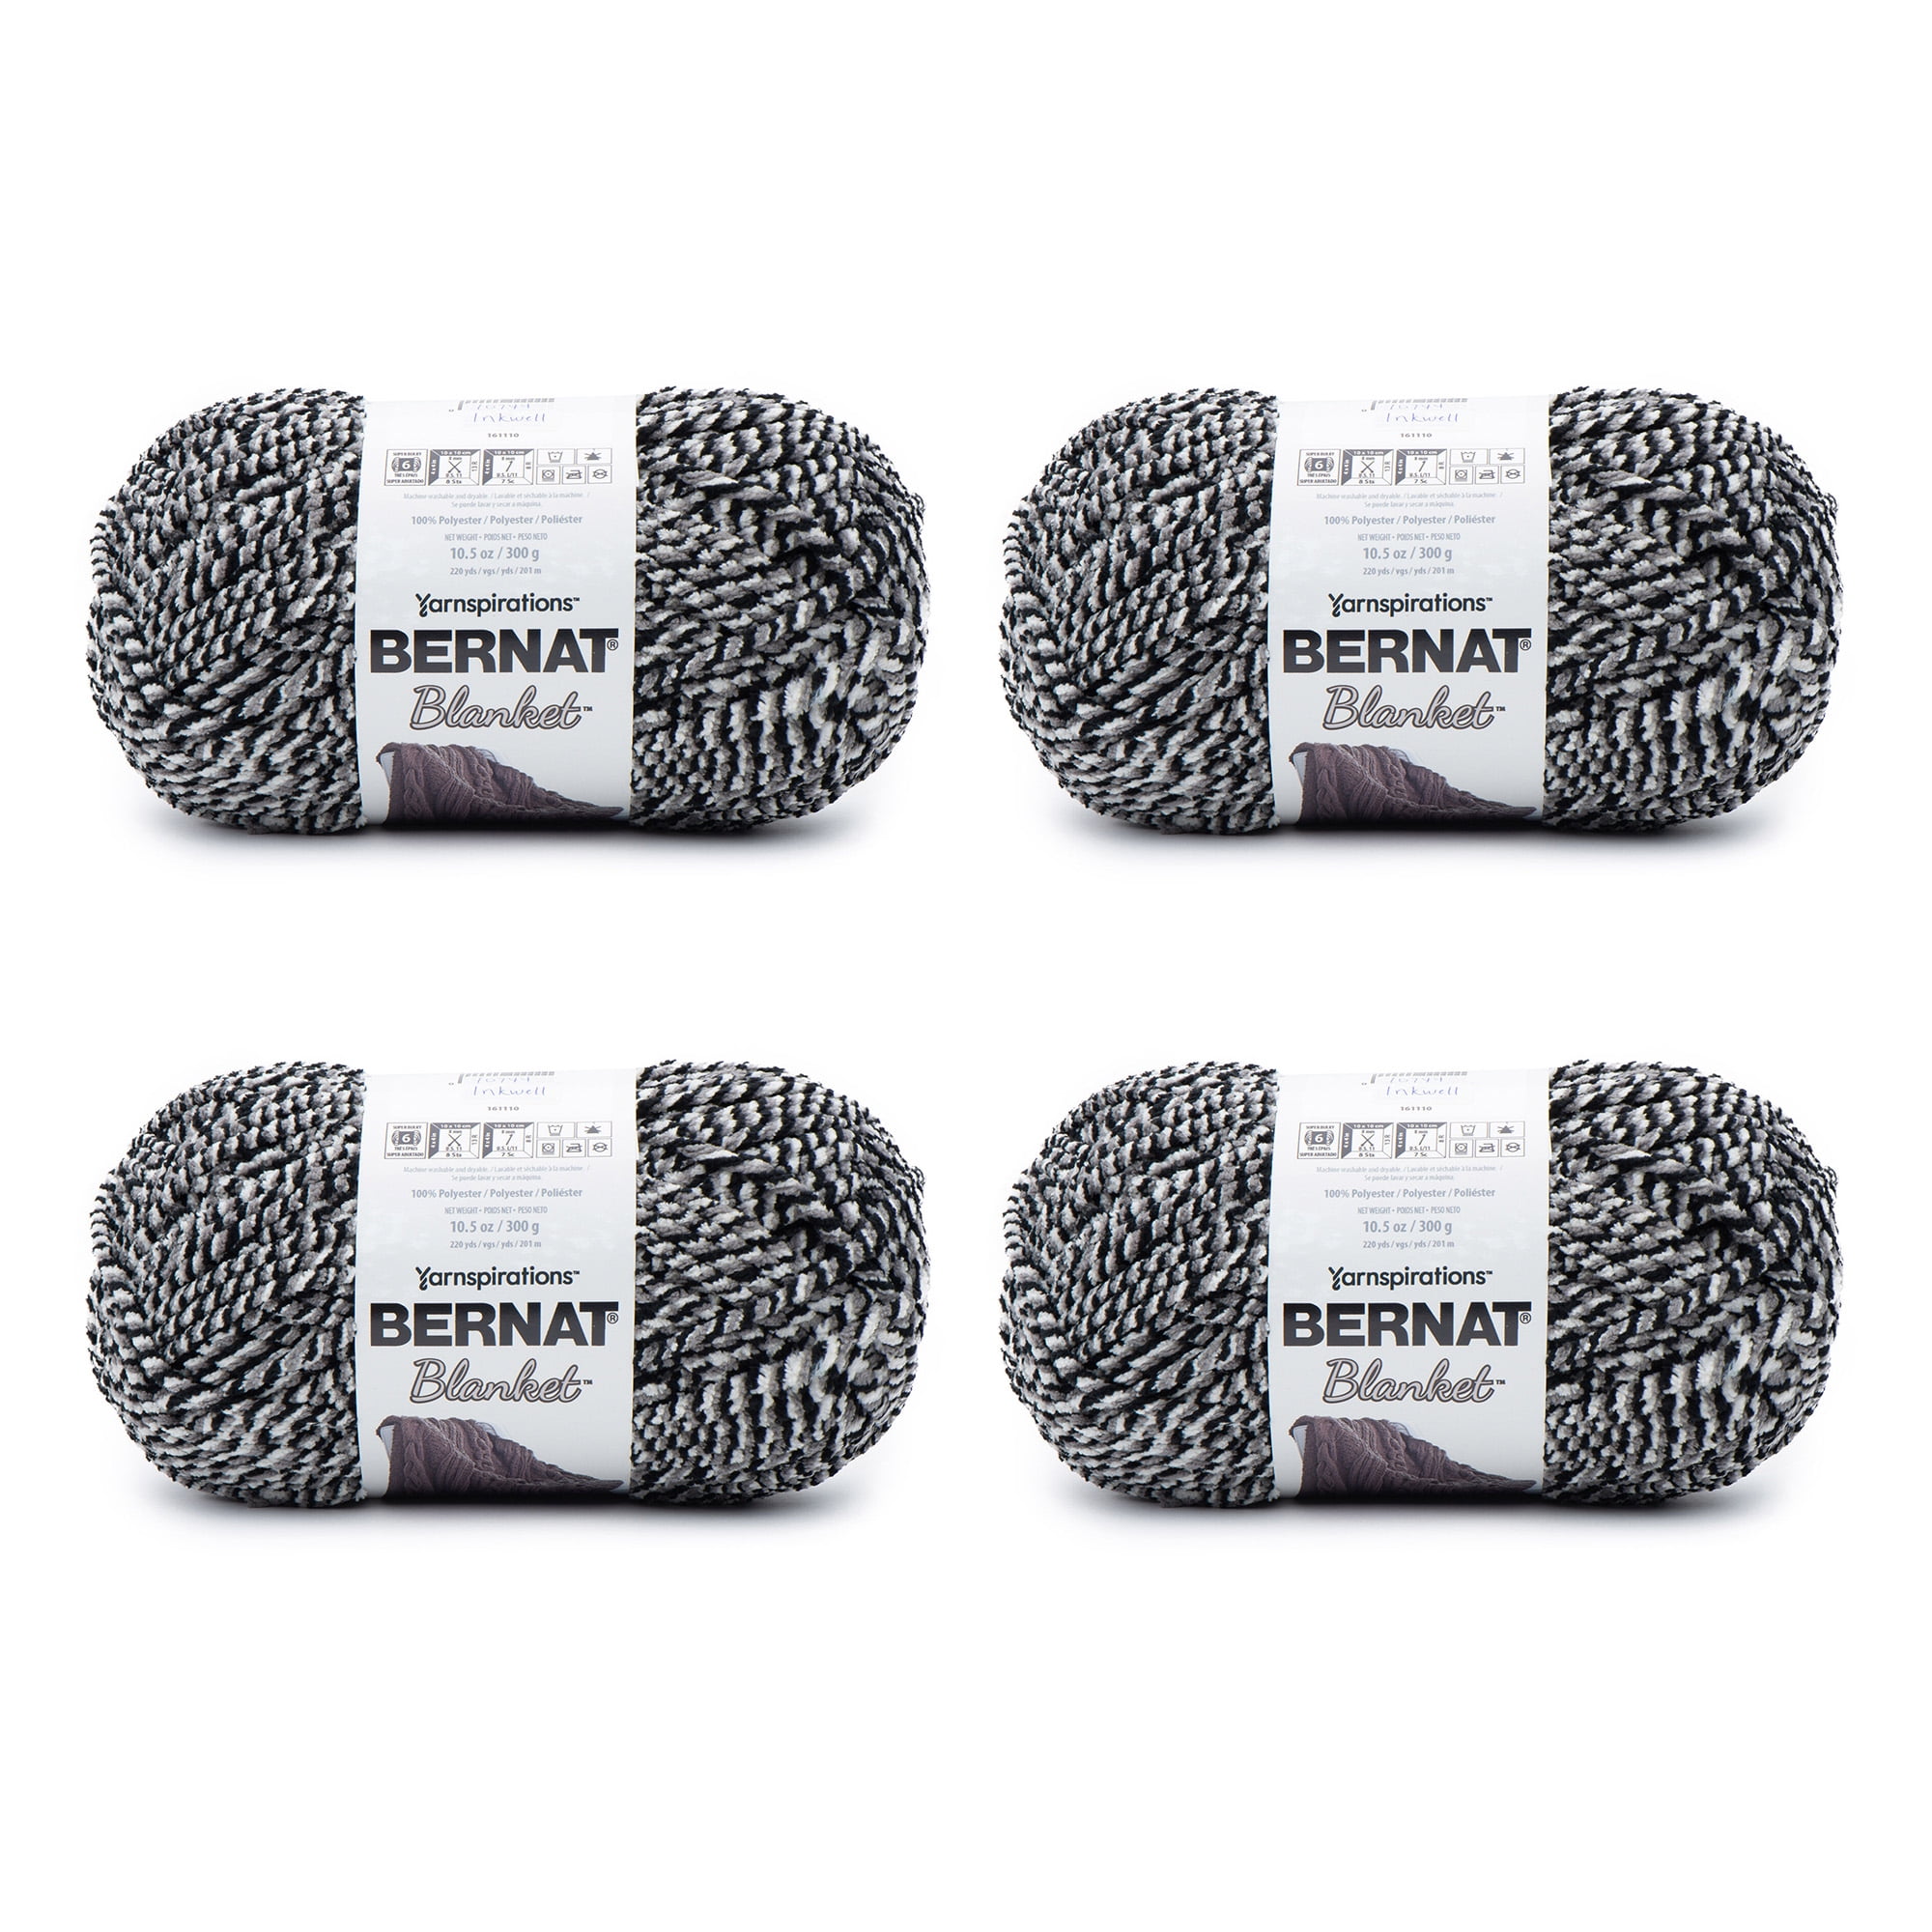  Bernat Blanket Ombre Orange Crush Ombre Yarn - 2 Pack of  300g/10.5oz - Polyester - 6 Super Bulky - 220 Yards - Knitting, Crocheting  & Crafts, Chunky Chenille Yarn : Home & Kitchen